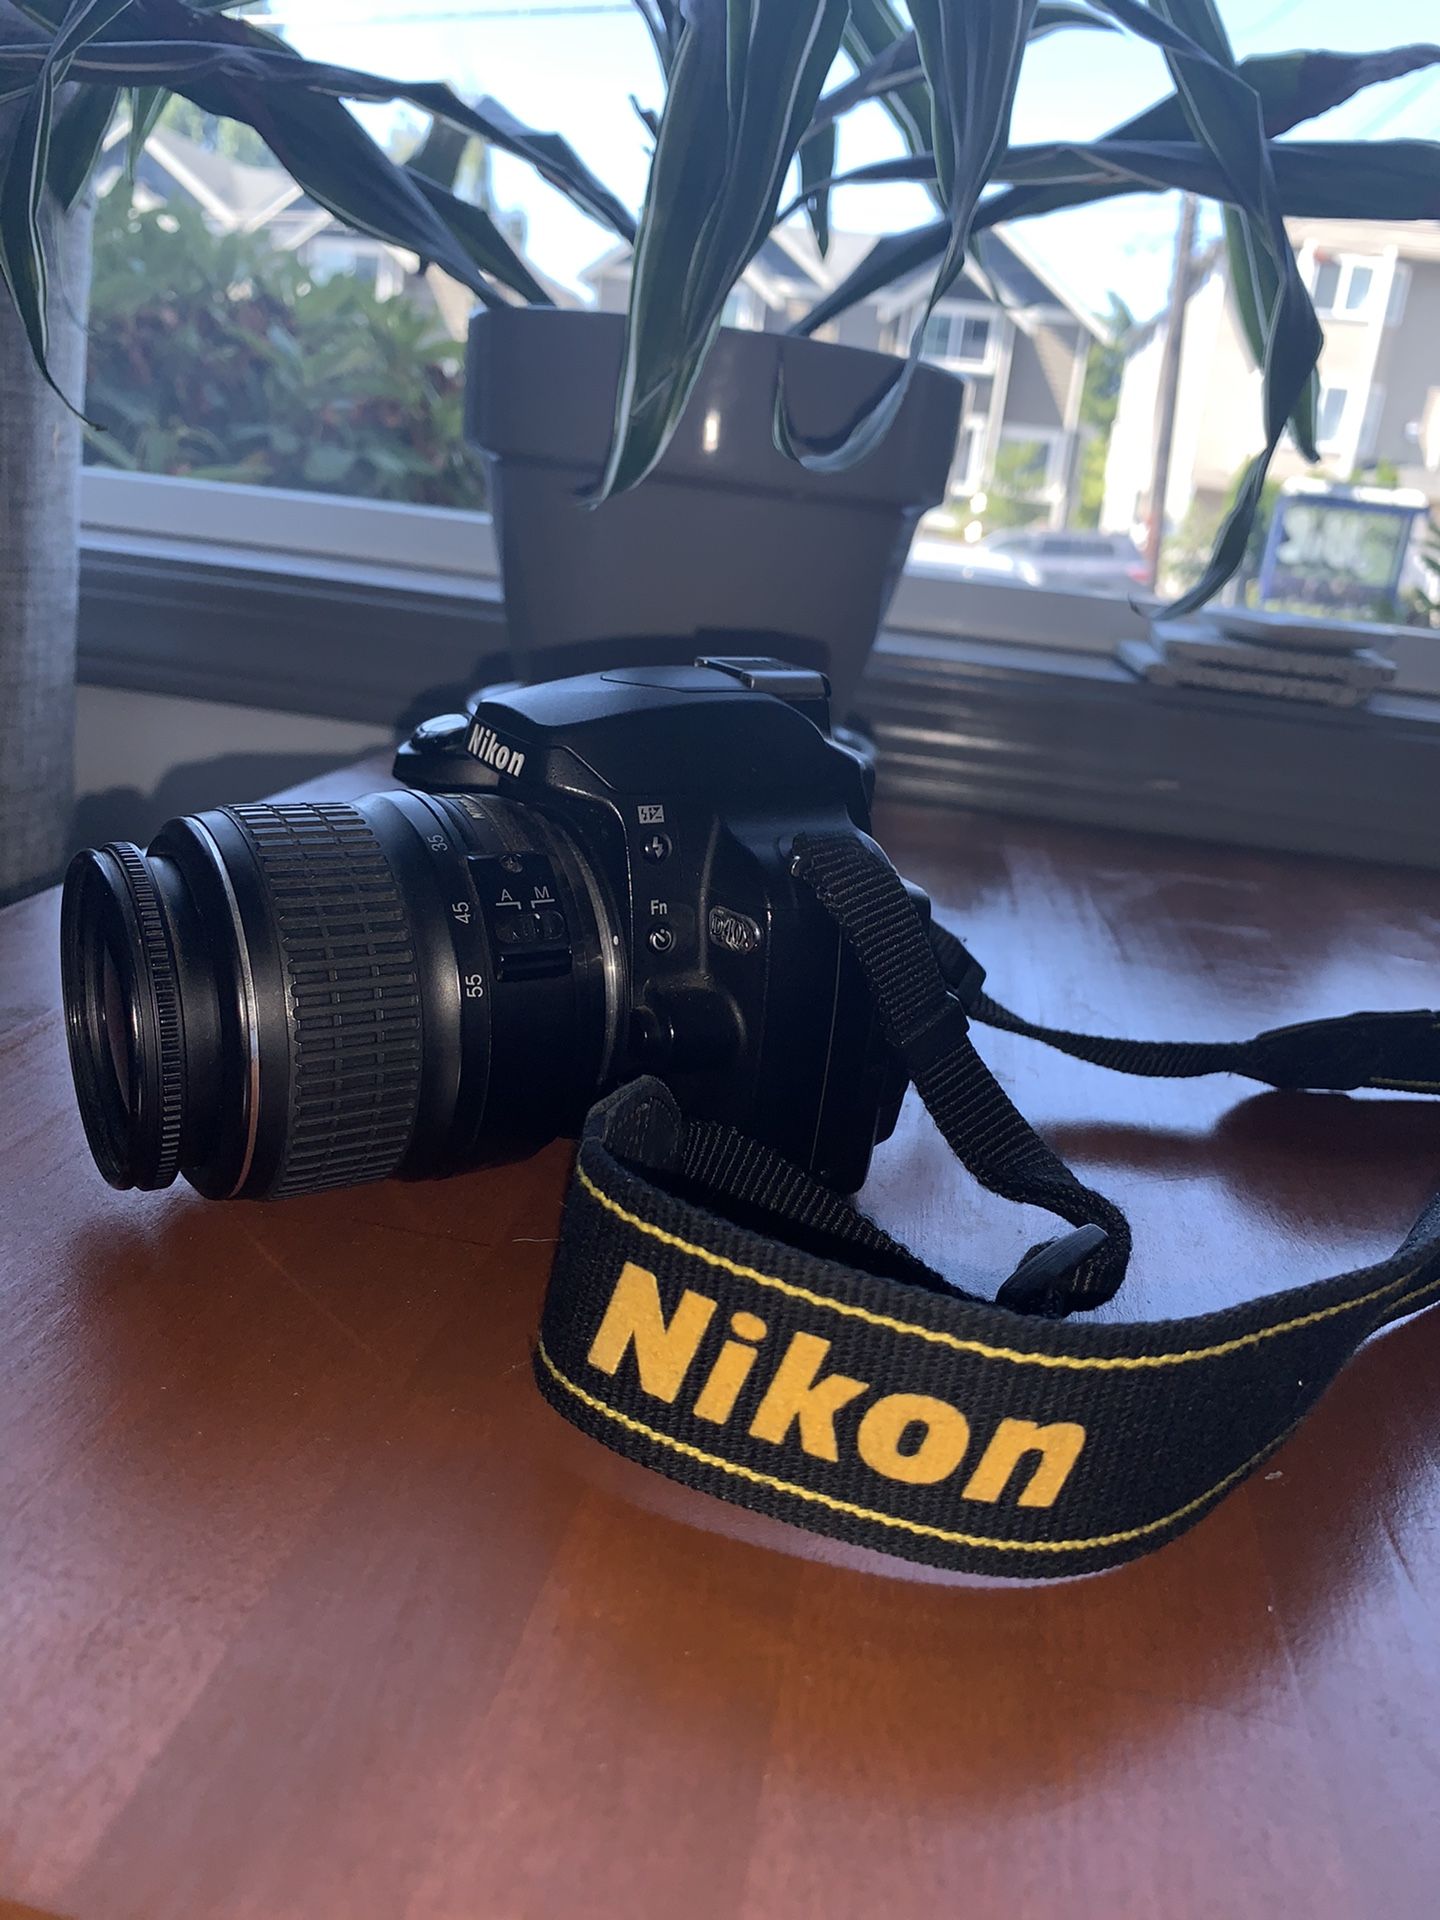 Nikon D40x with 18-55mm lens